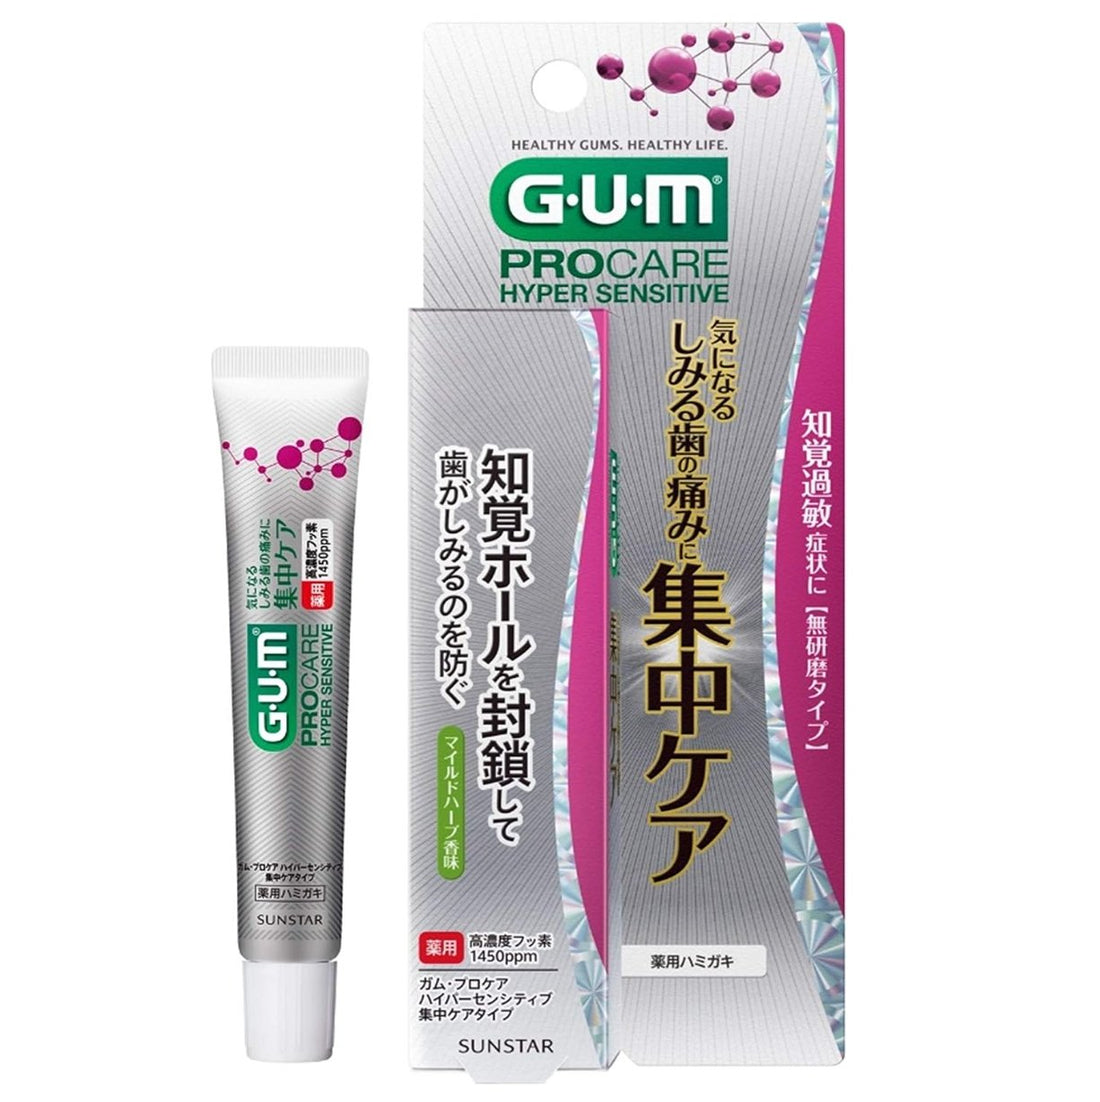 Gum Pro Care Hyper Sensitive Paste Intensive care type 15g - NihonMura